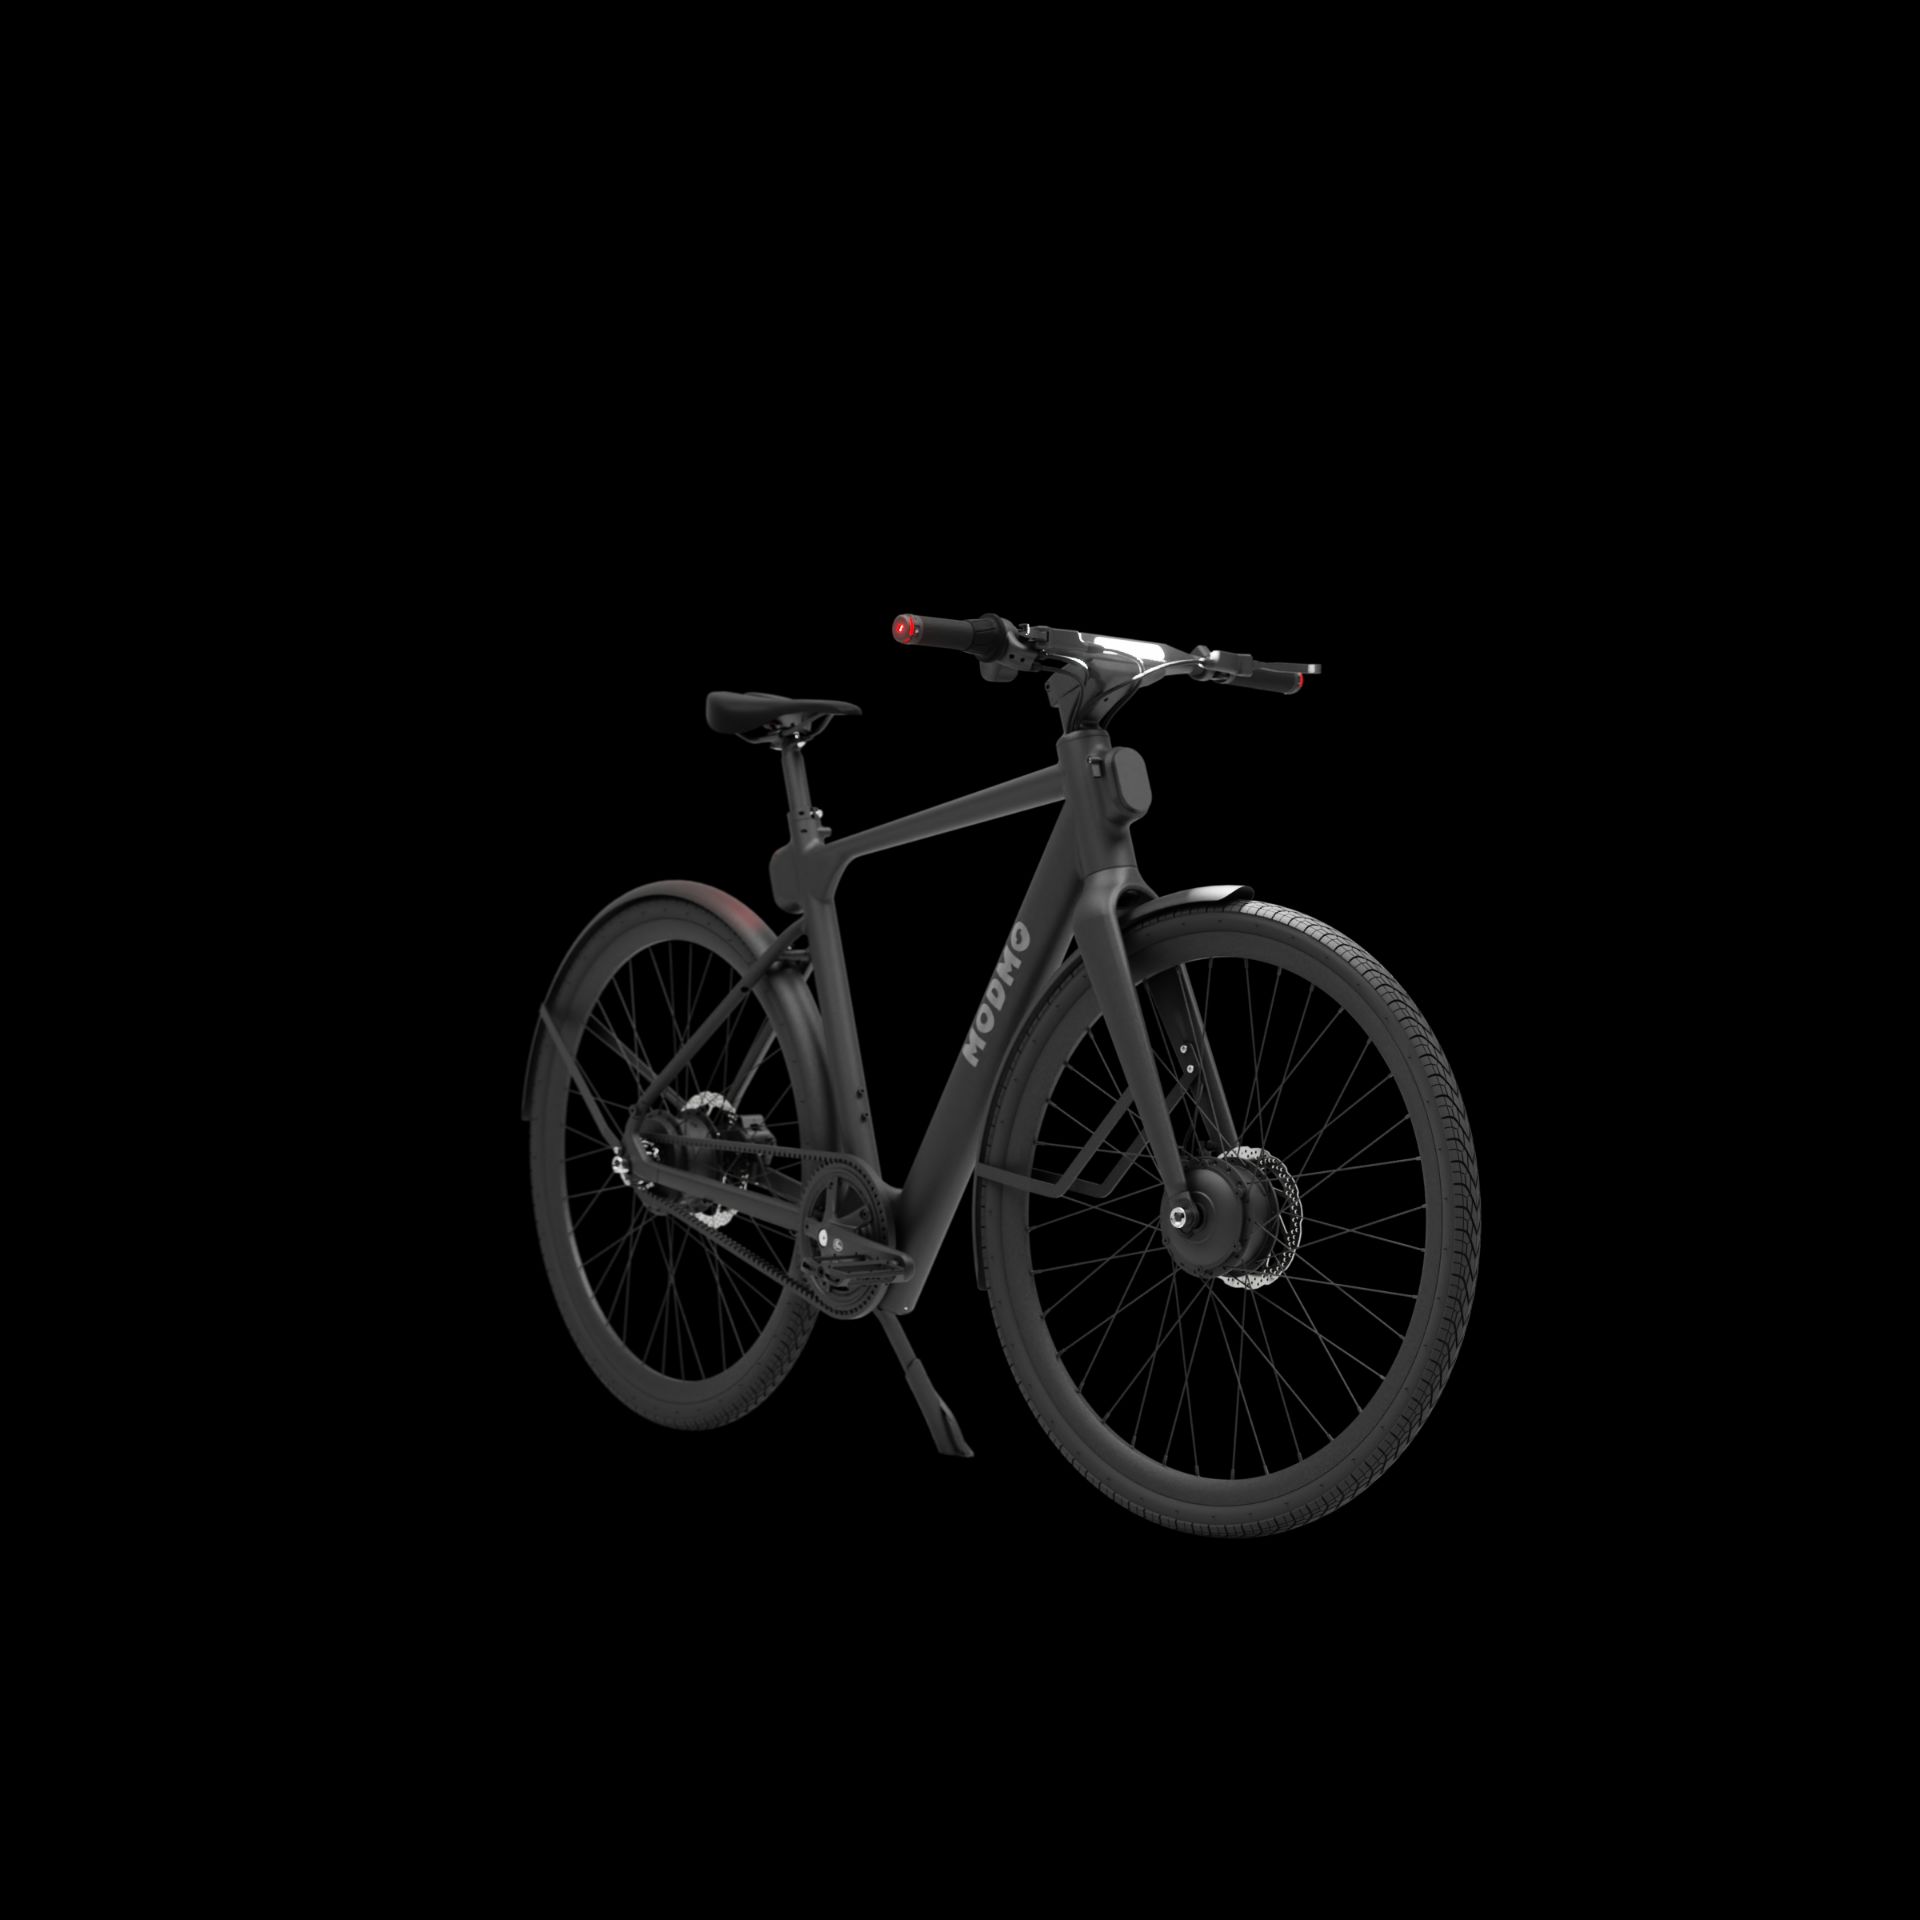 Modmo Saigon+ Electric Bicycle - RRP £2800 - Size S (Rider: 140-155cm) - Image 8 of 14